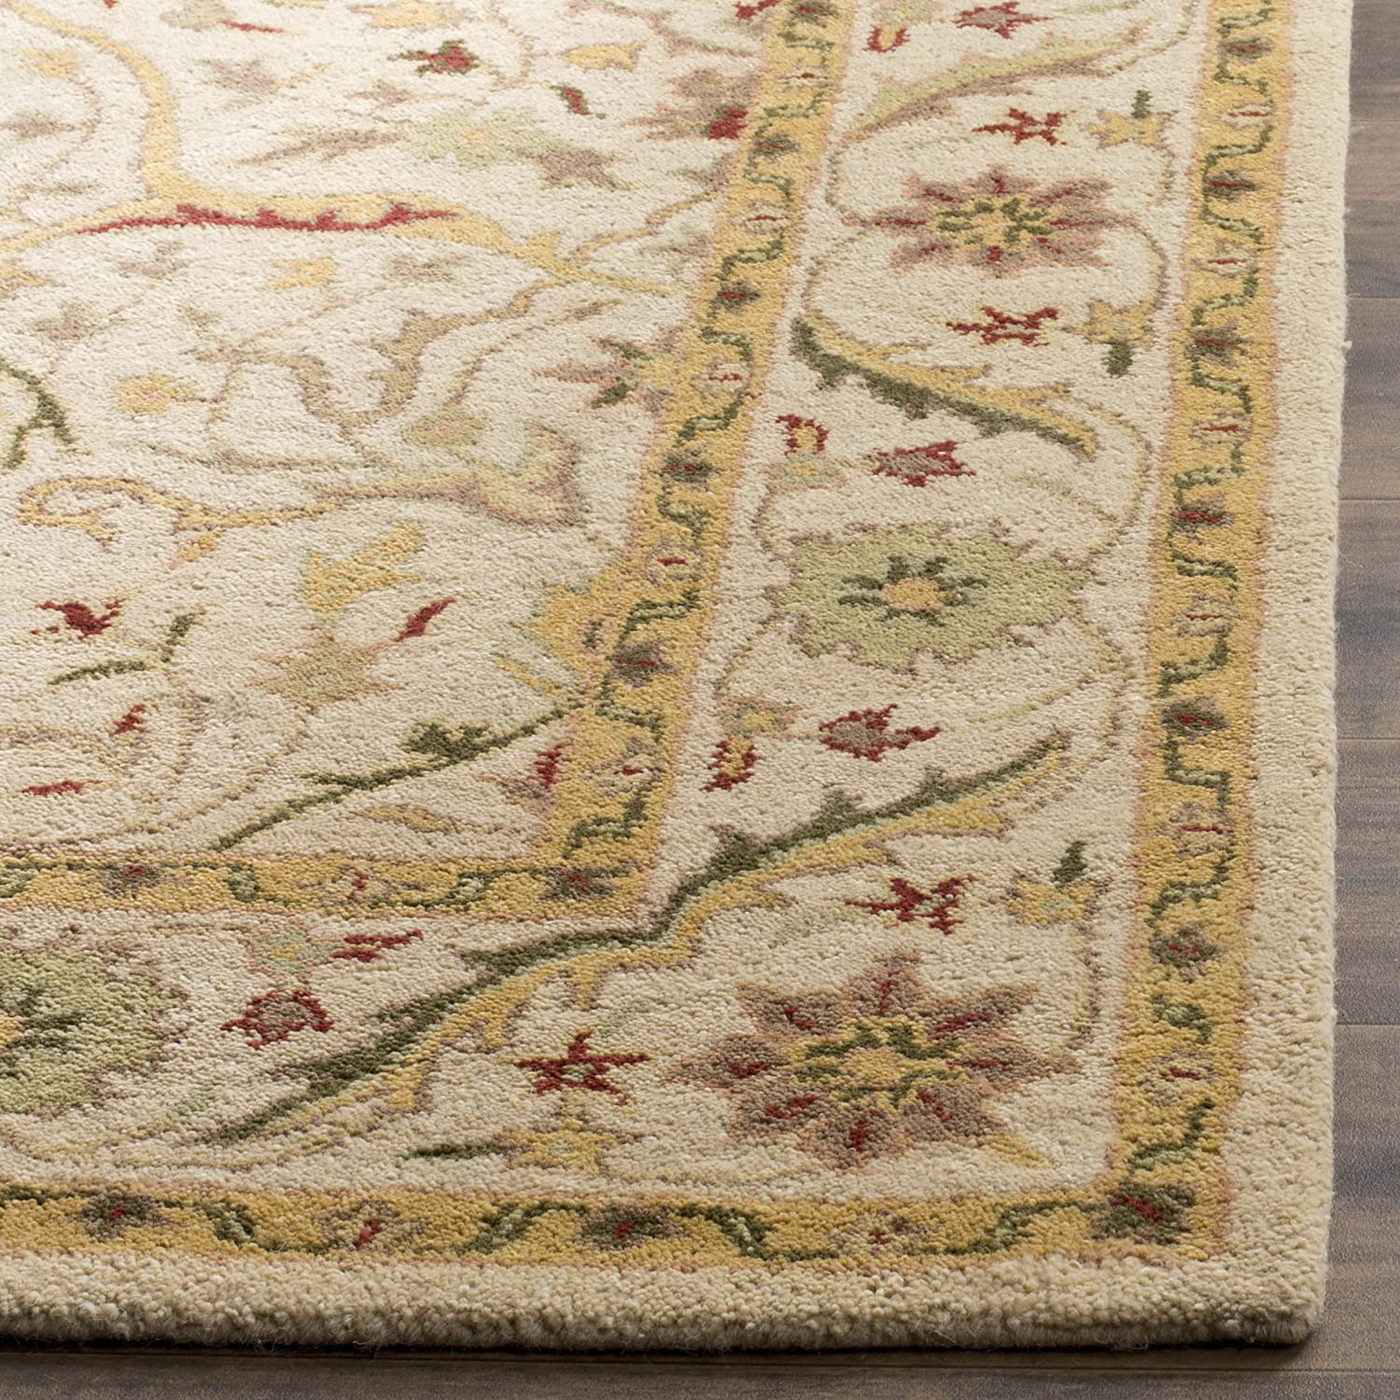 Safavieh Antiquity Collection AT14B Handmade Traditional Oriental Premium Wool Area Rug, 3'6" x 3'6" Round, Black